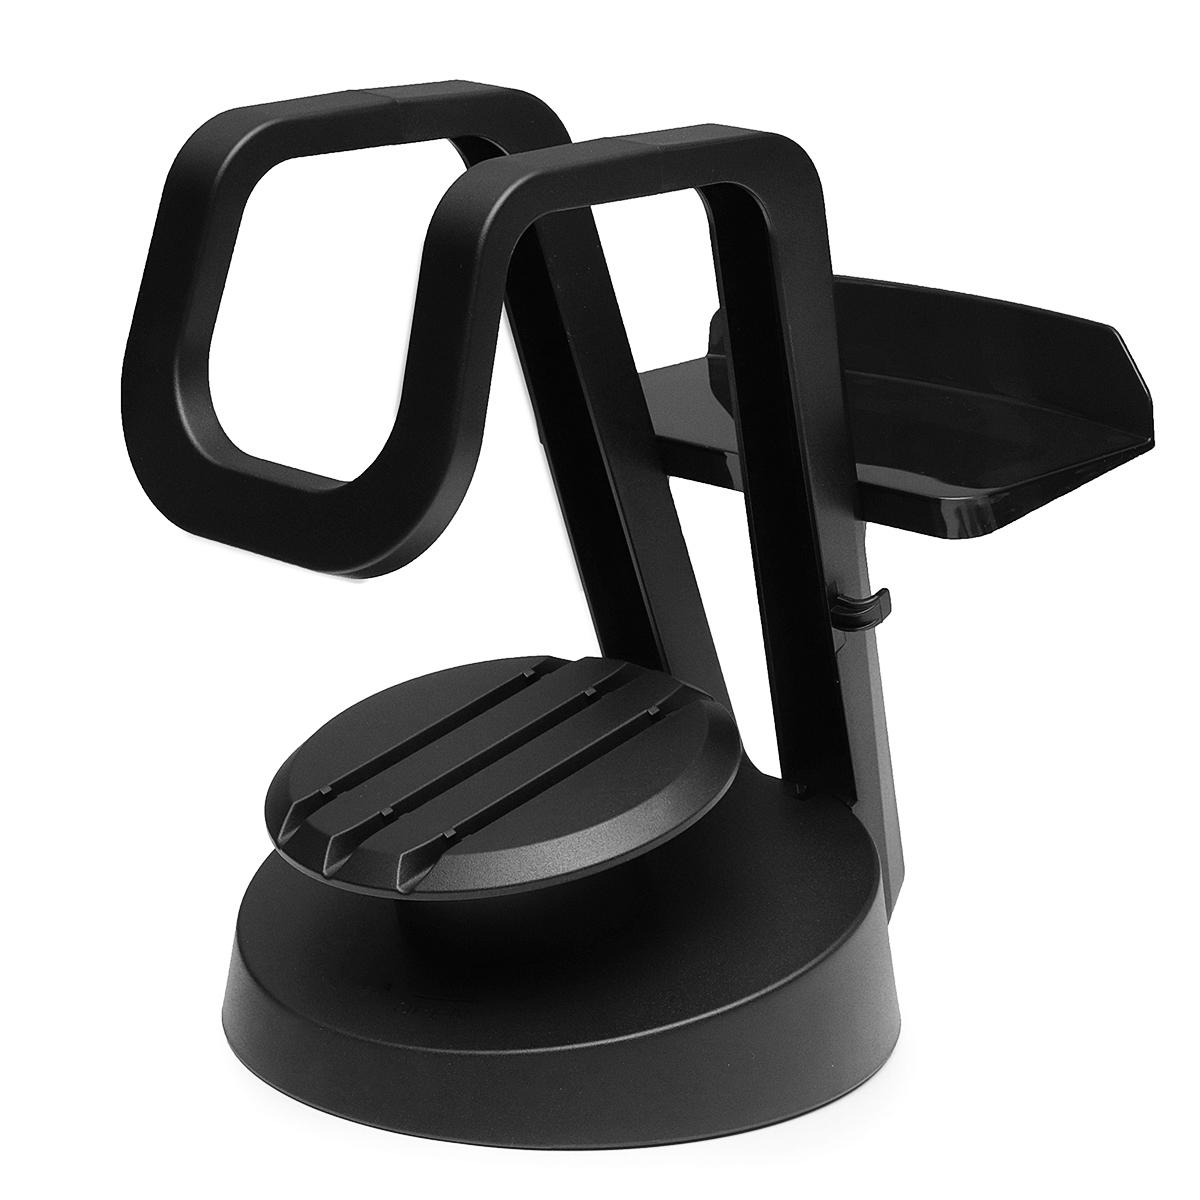 Universal VR Glasses Stand Holder for PS VR/Oculus Rift/HTC Vive/Gear VR